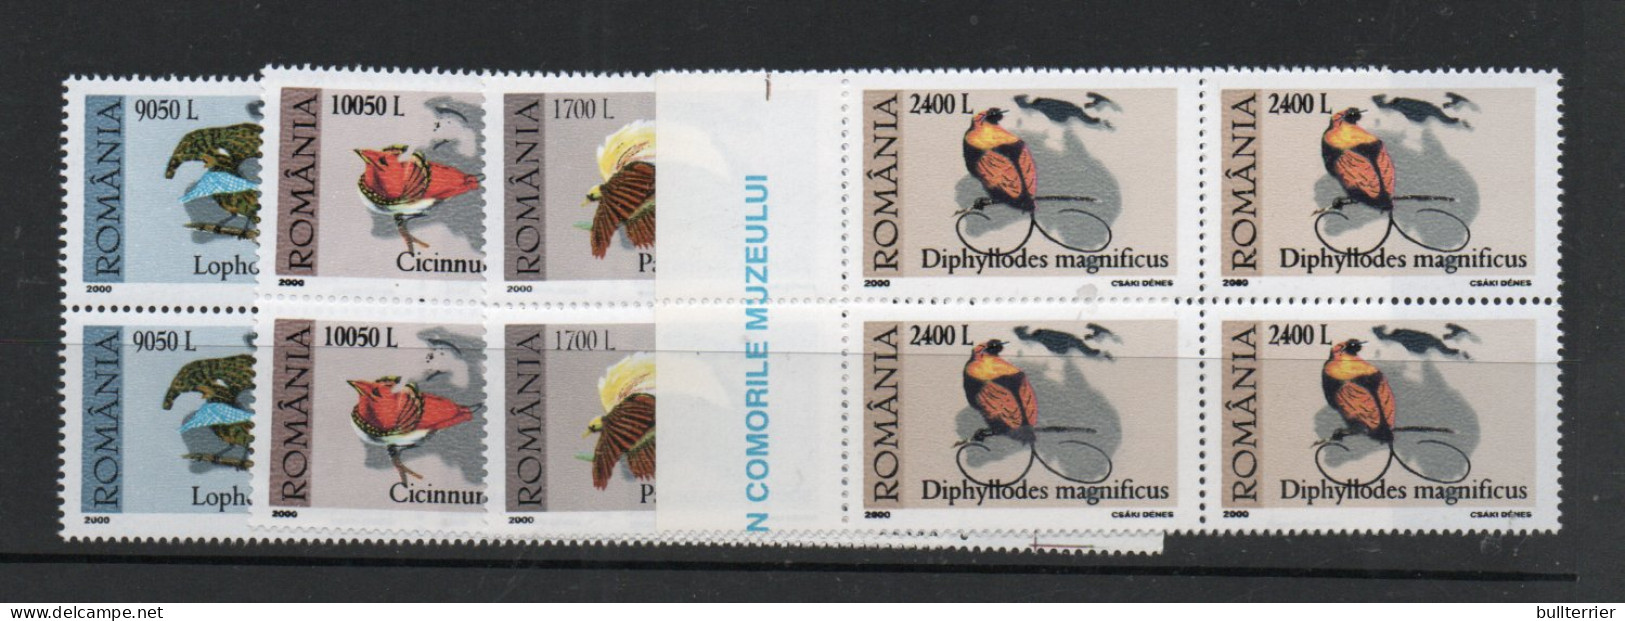 BIRDS  -  ROMANIA - 2000 - BIRDS OF PARADISE  SET OF 4 IN BLOCKS OF 4  MINT NEVER HINGED, SG CAT £23.60 - Tauben & Flughühner